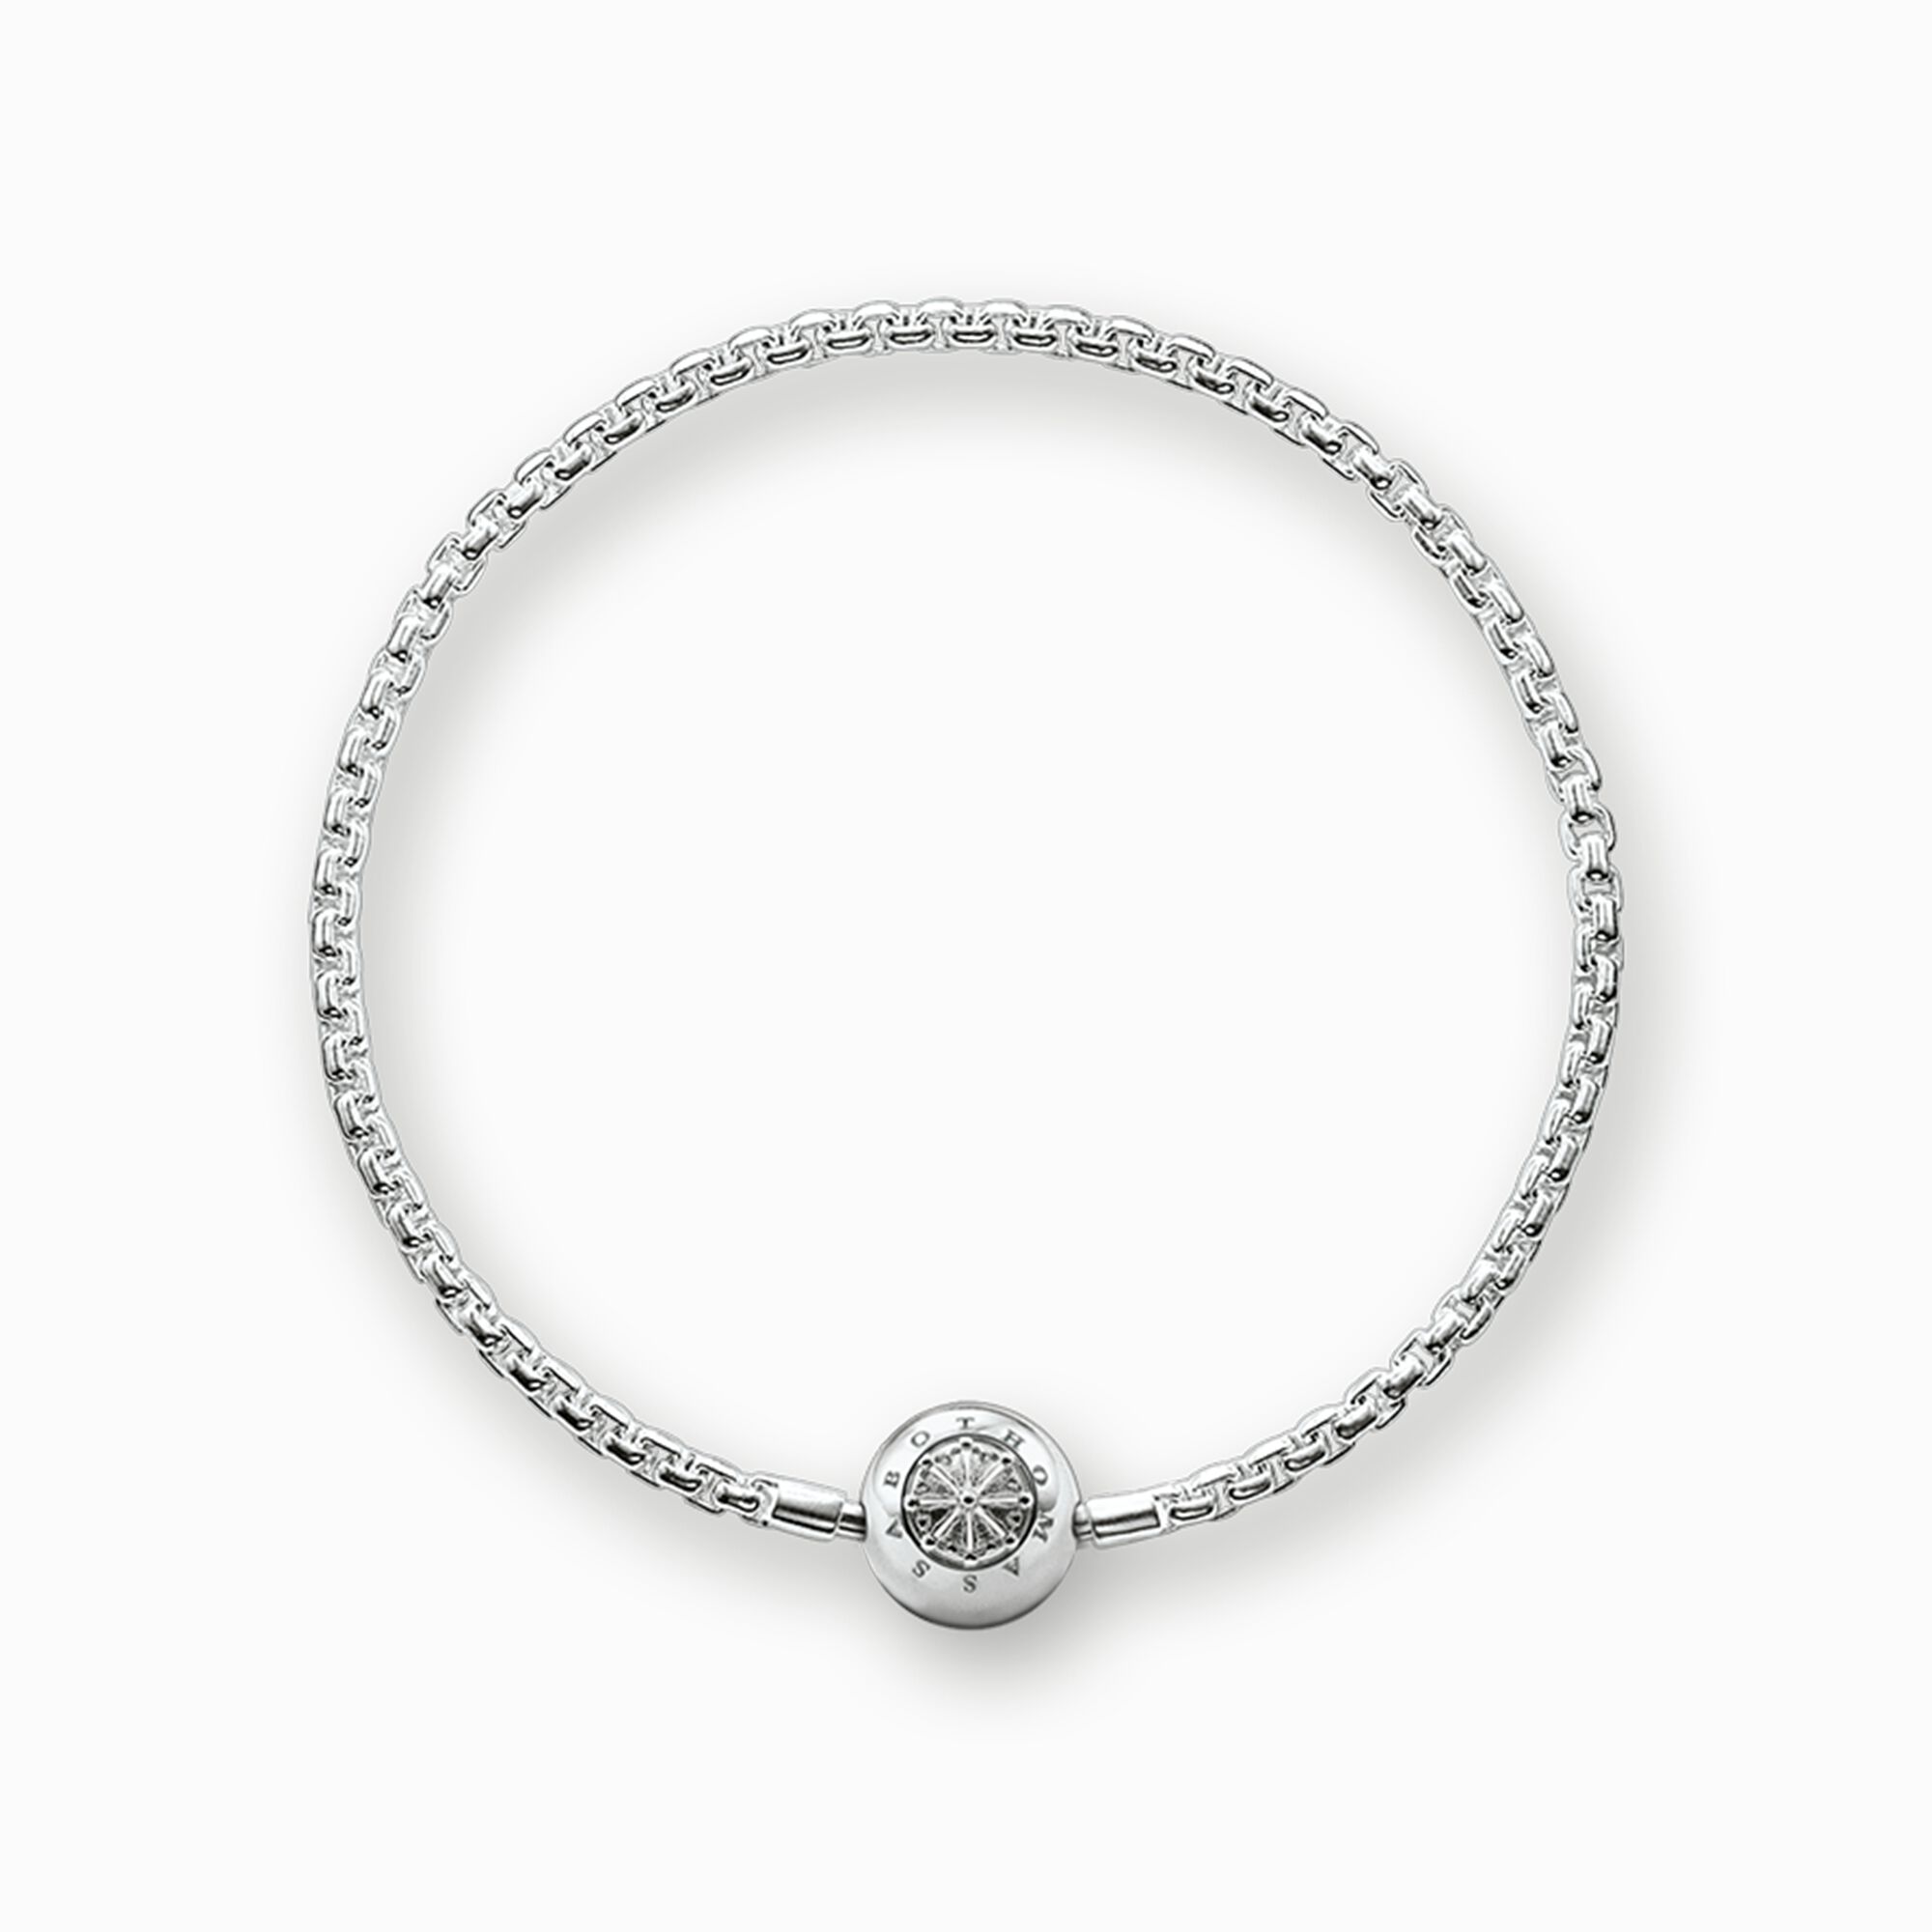 Bracelet for Beads | Silver | THOMAS SABO Sterling